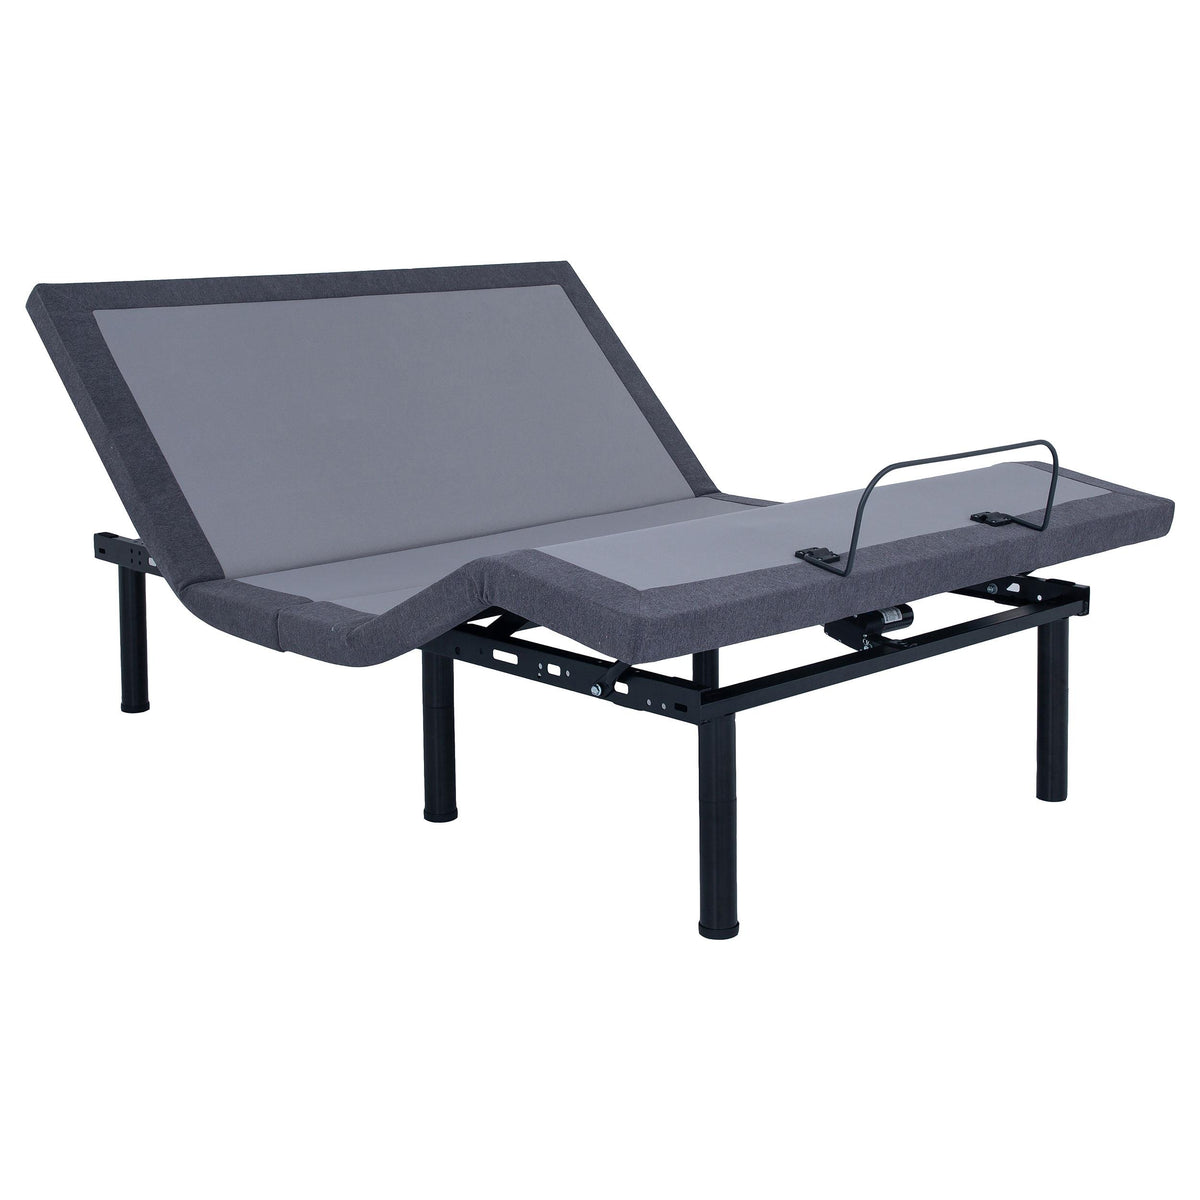 Negan Twin XL Adjustable Bed Base Grey and Black  Half Price Furniture